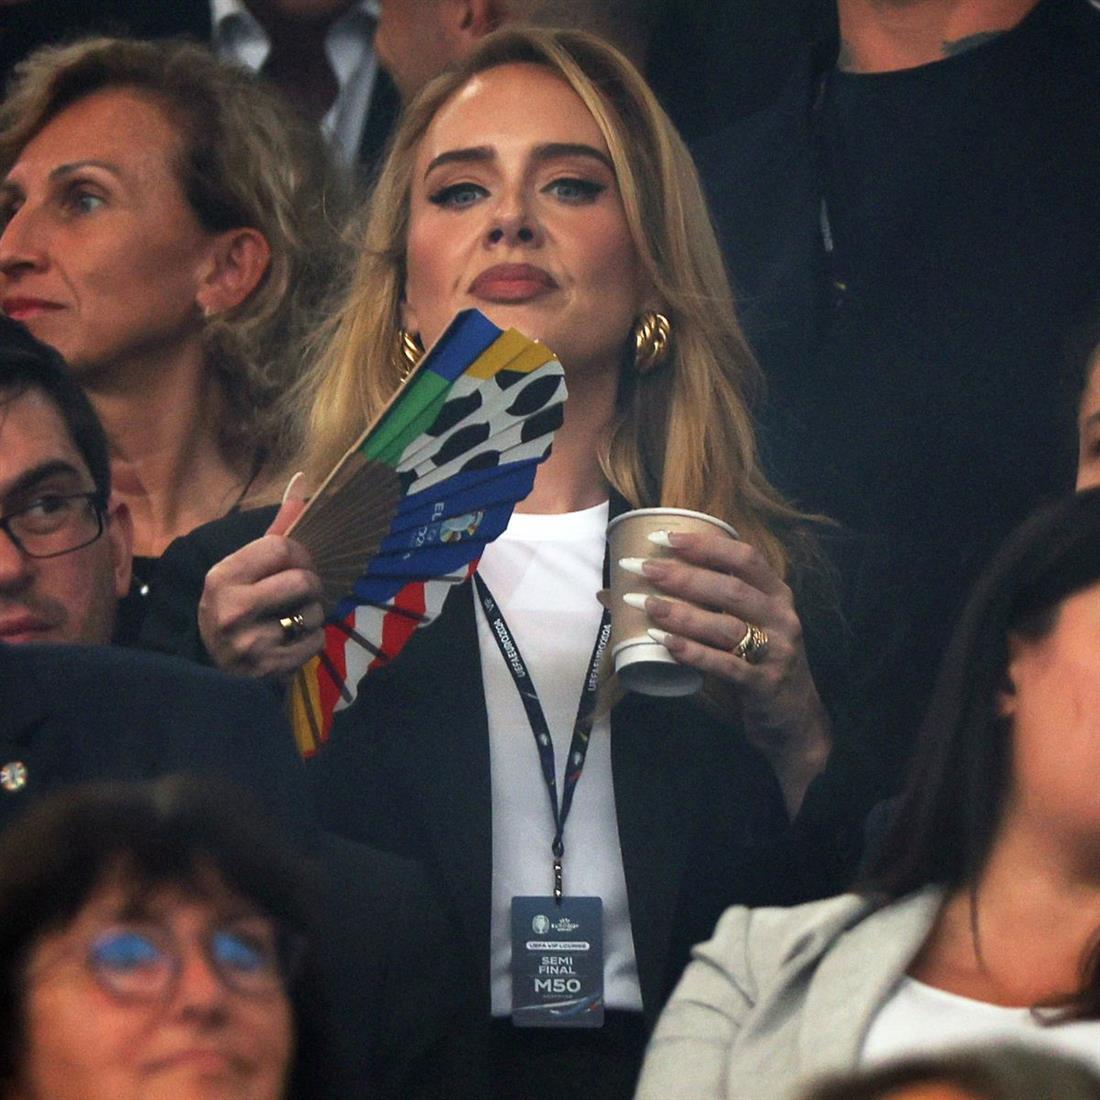 Adele: Με νεύρα στις κερκίδες του Euro  - Φώναξε "σκάσε" σε οπαδό (βίντεο)
